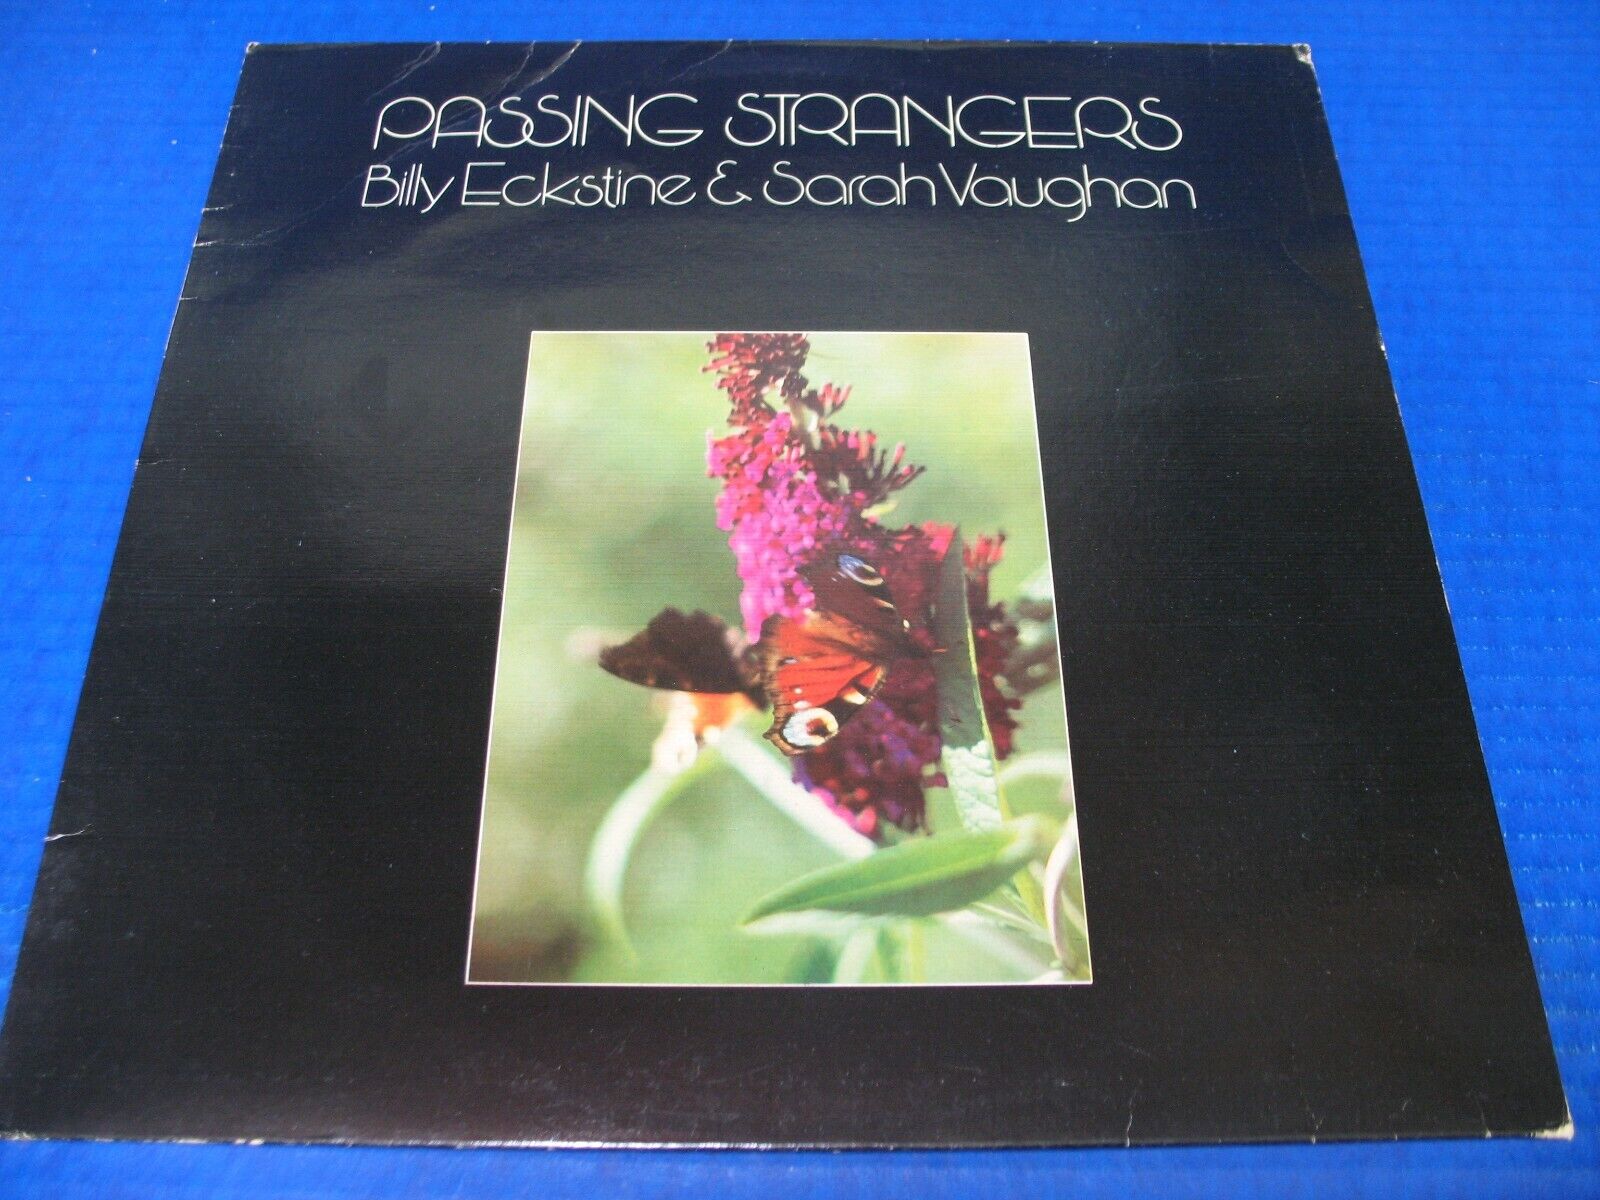 Billy Eckstine & Sarah Vaughan ‎- Passing Strangers - Vocal Jazz LP UK Import